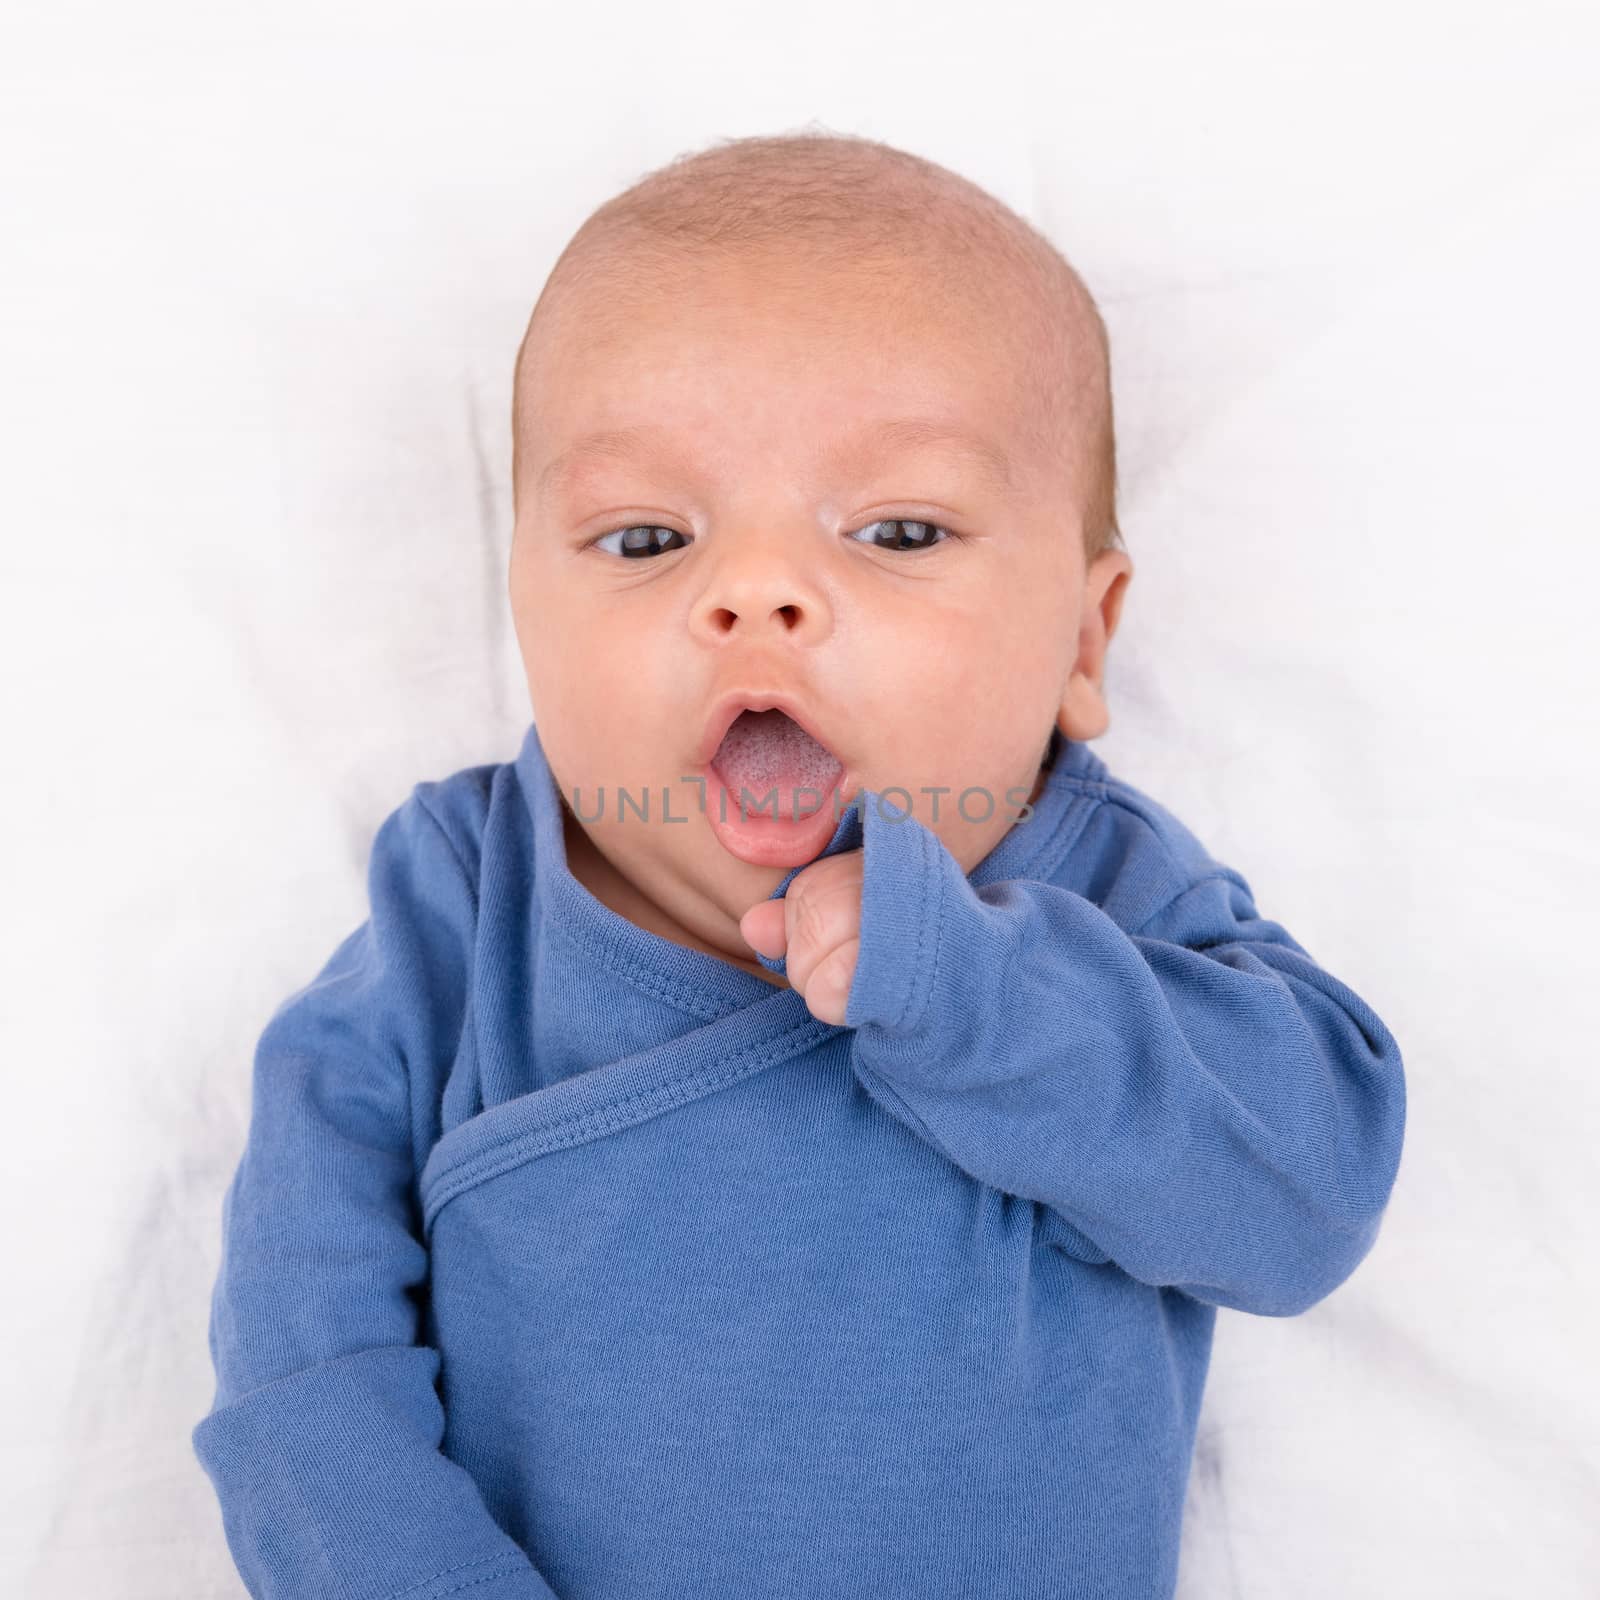 Cute eurasian newborn baby boy wearing a blue infant bodysuit on white sheet